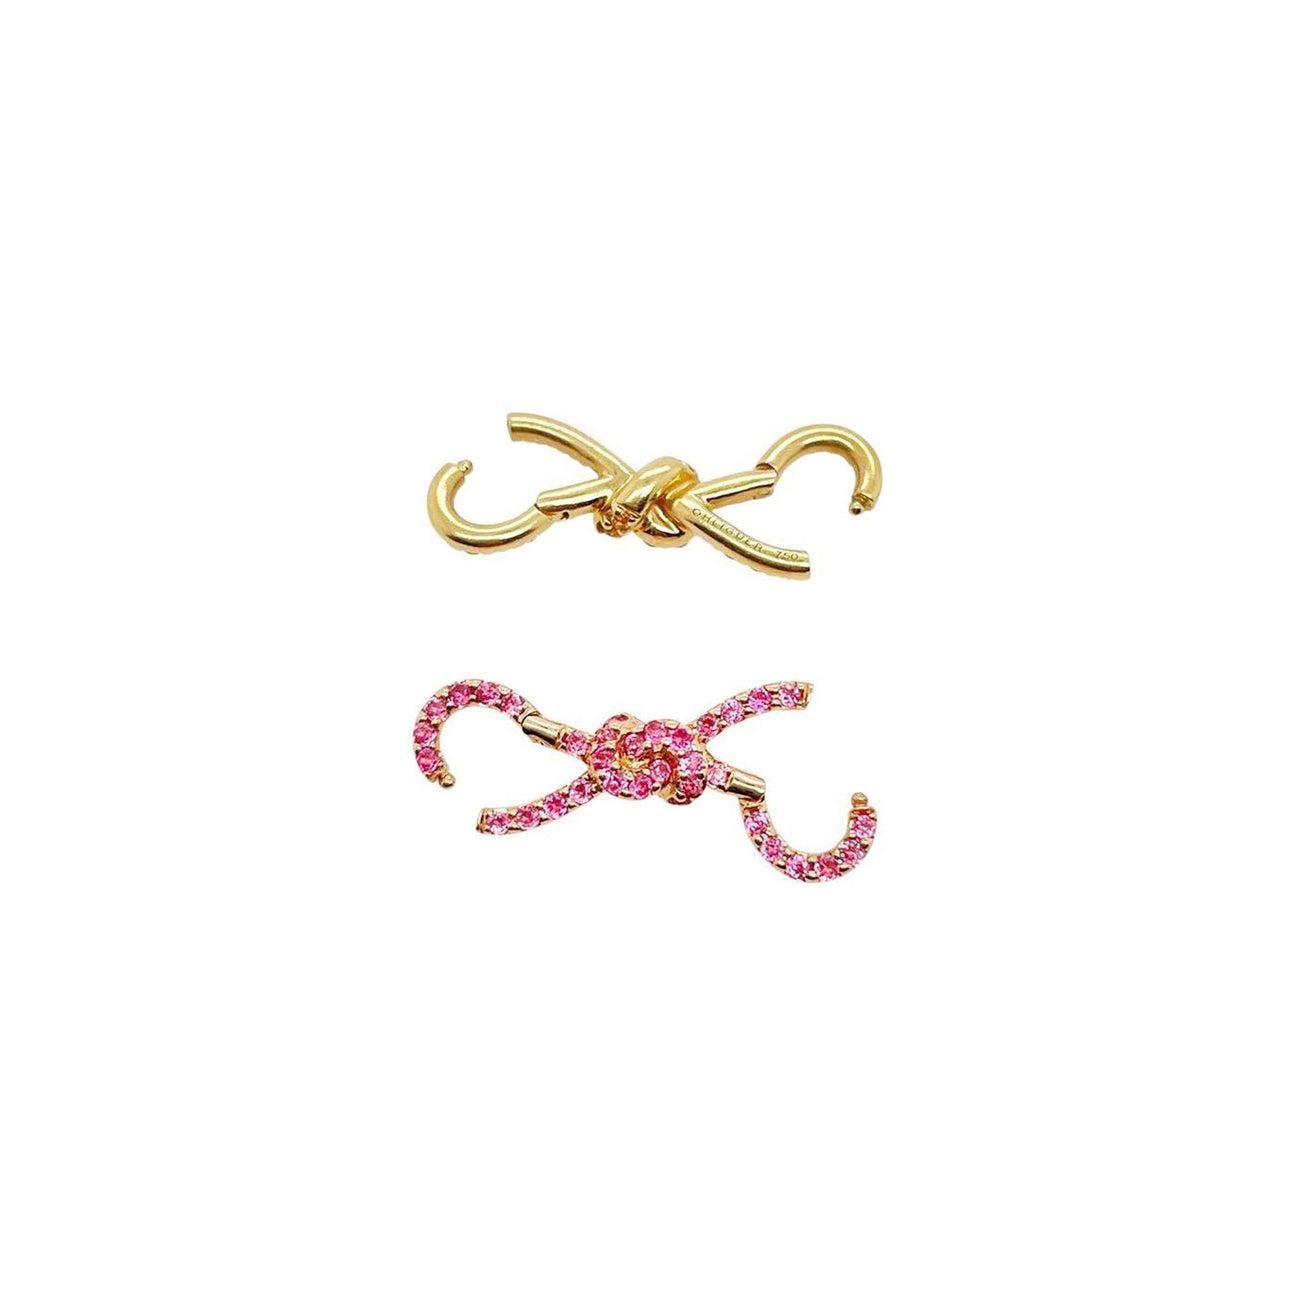 Golden Mandarin Garnet Bow pendant enhancer clasp in 18ct yellow gold For Sale 2